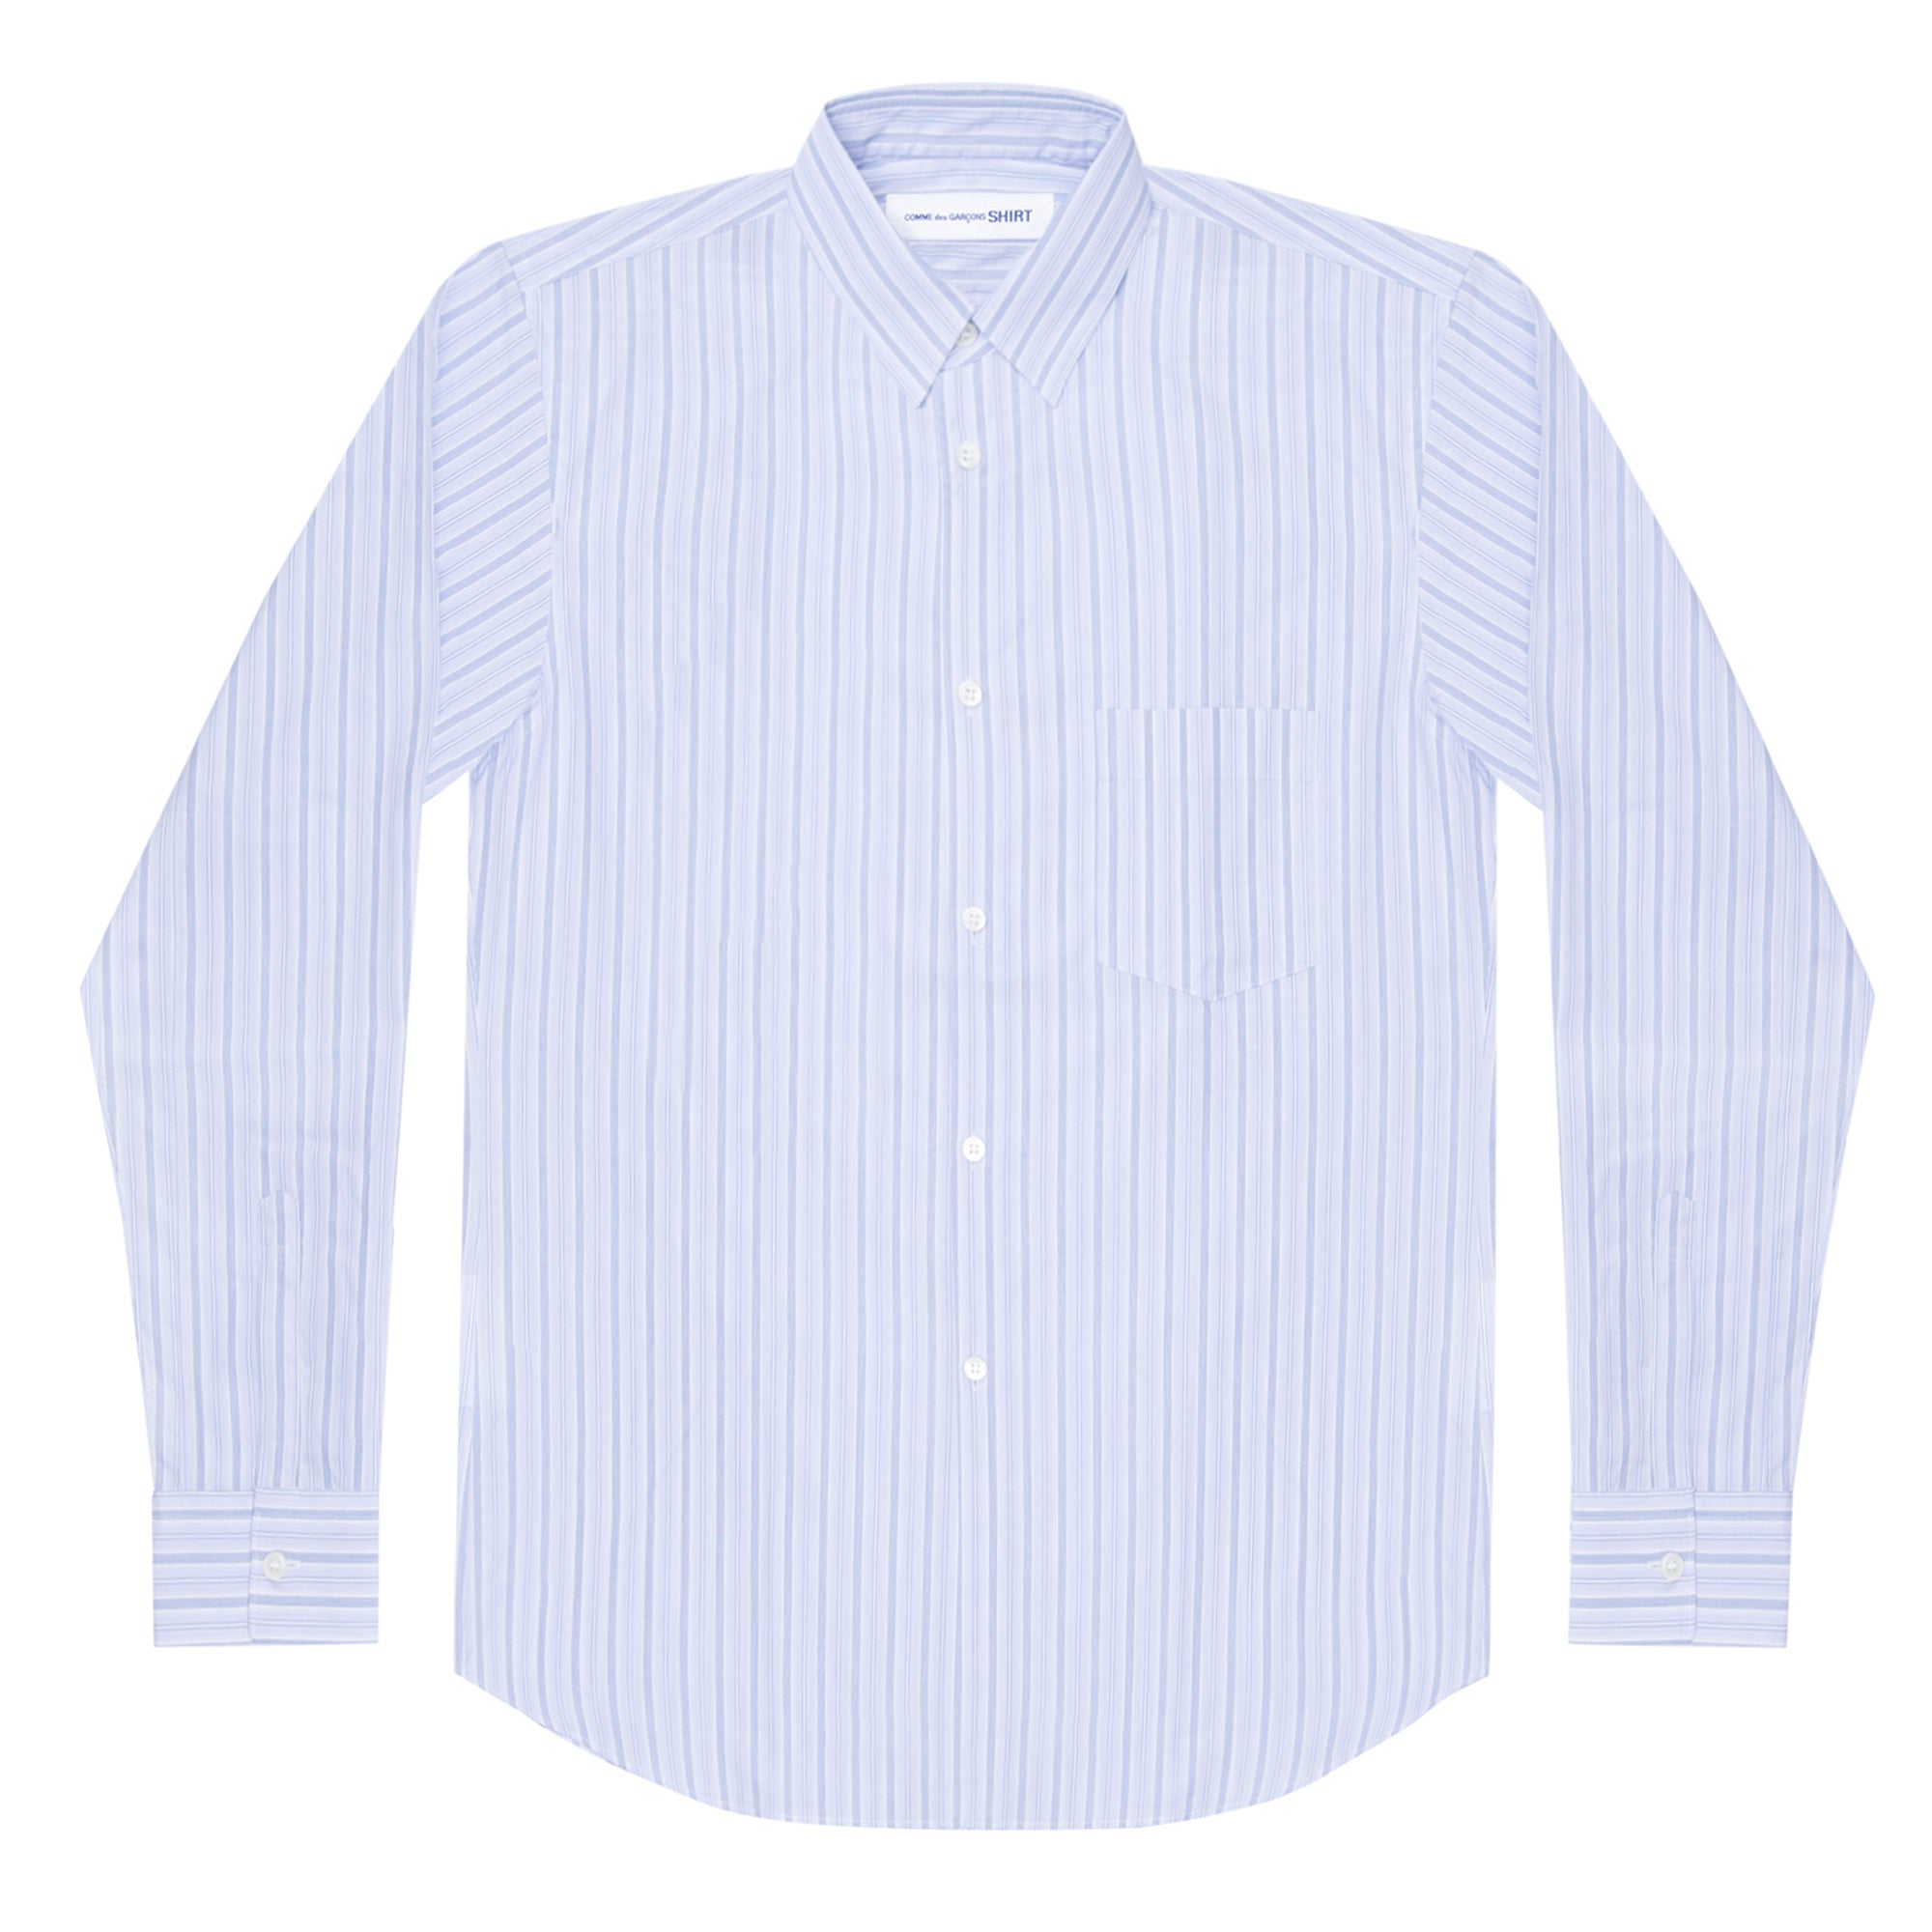 CDG SHIRT FOREVER - Cotton Shirt CDGS2STA - (40 Stripes) view 1